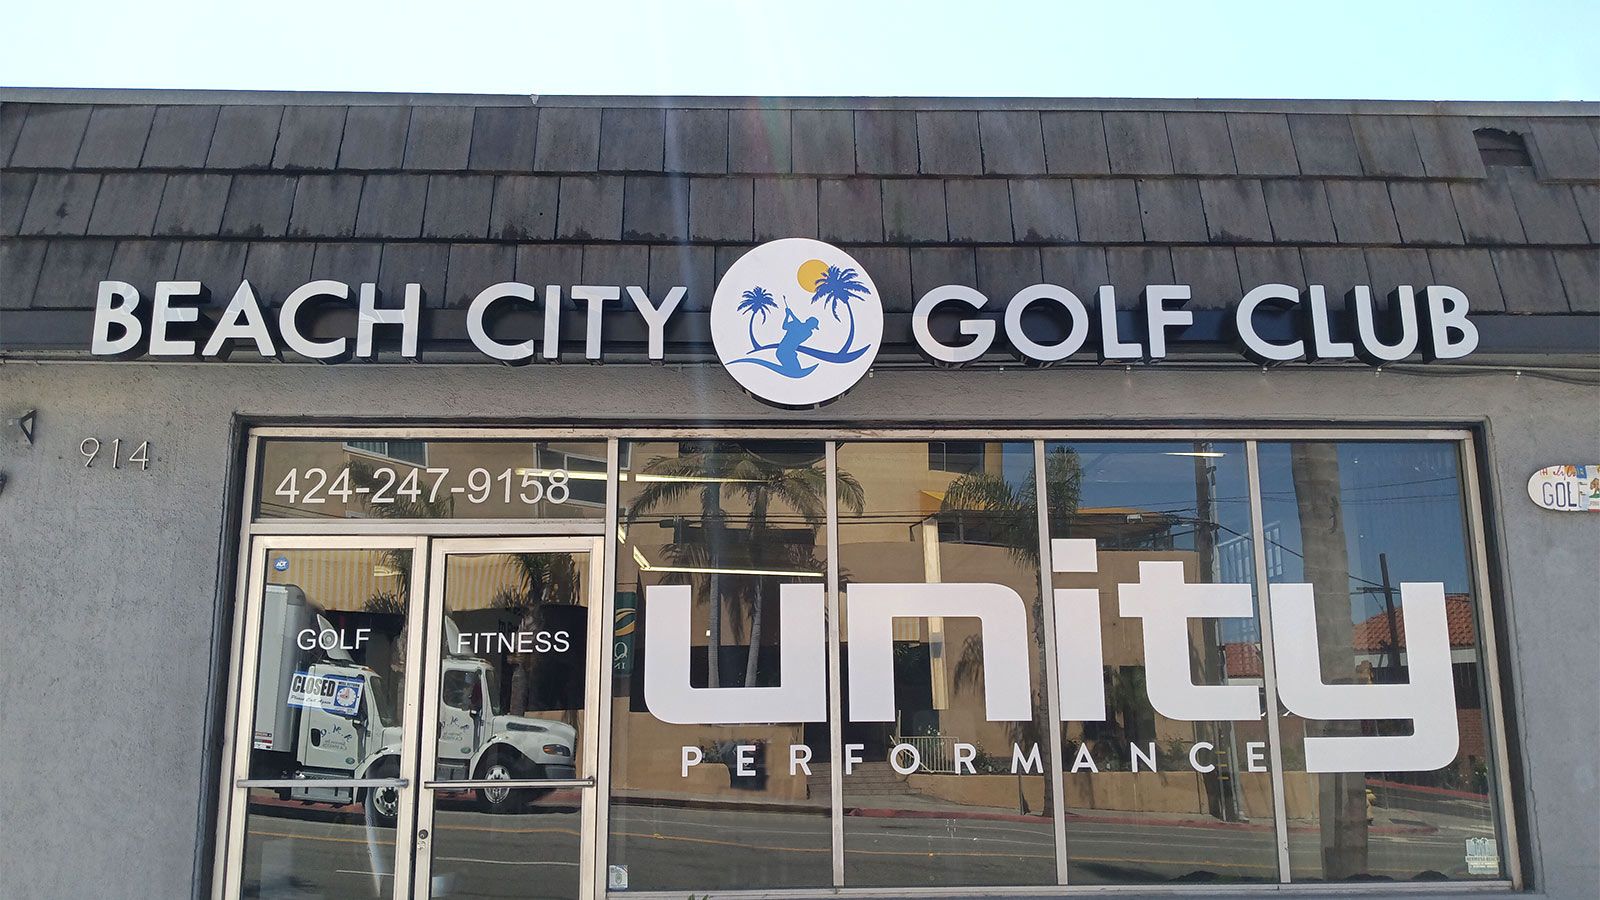 Beach City Golf Club sign